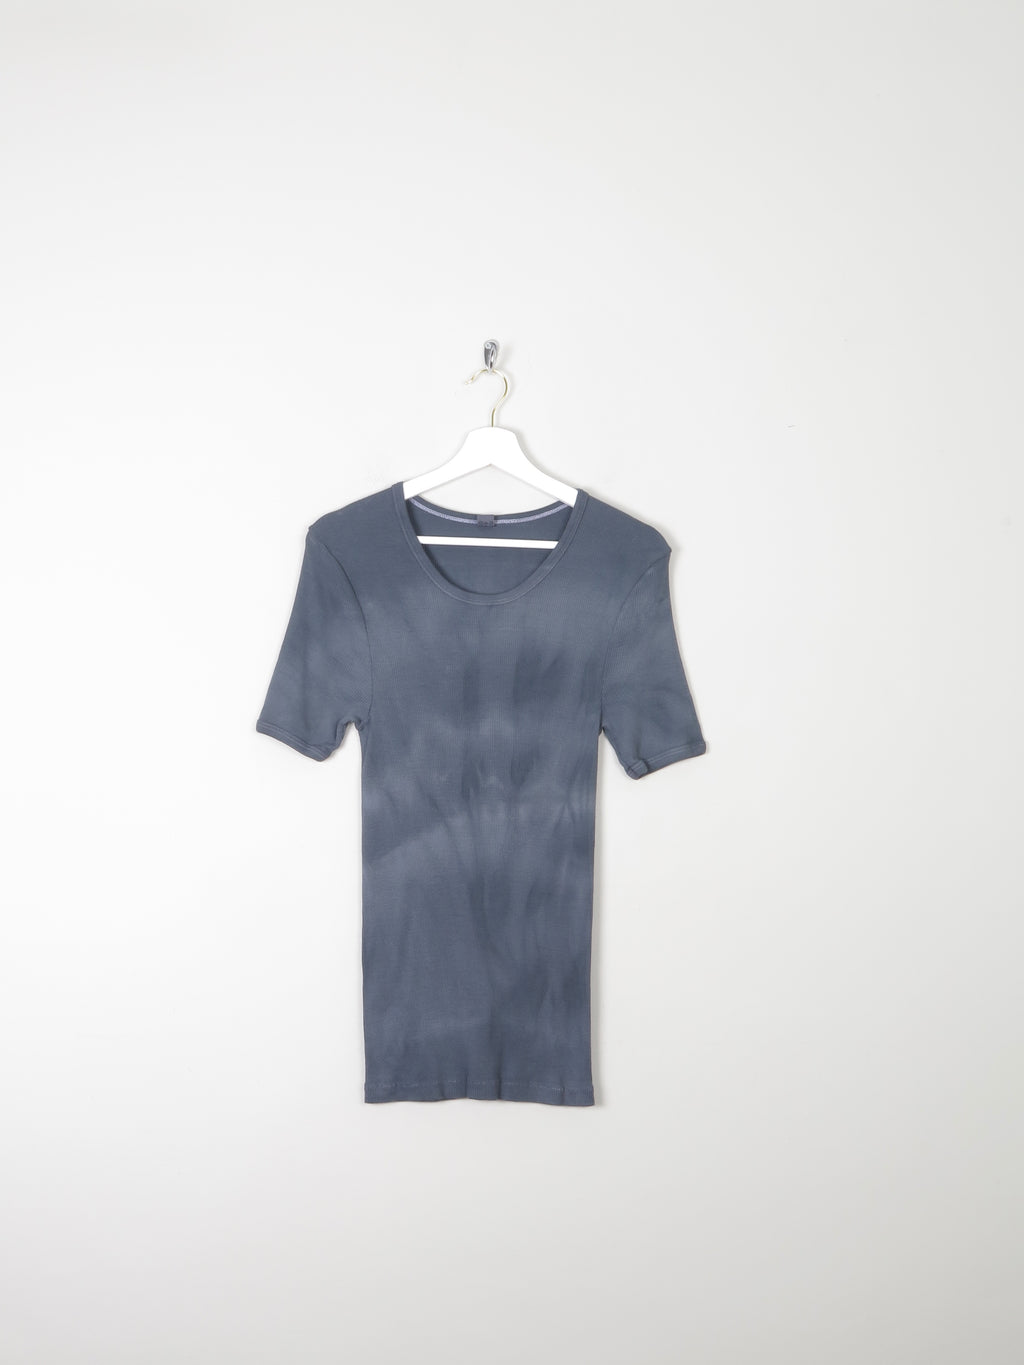 Unisex Tie Dye Ribbed Vintage T-shirt S/M